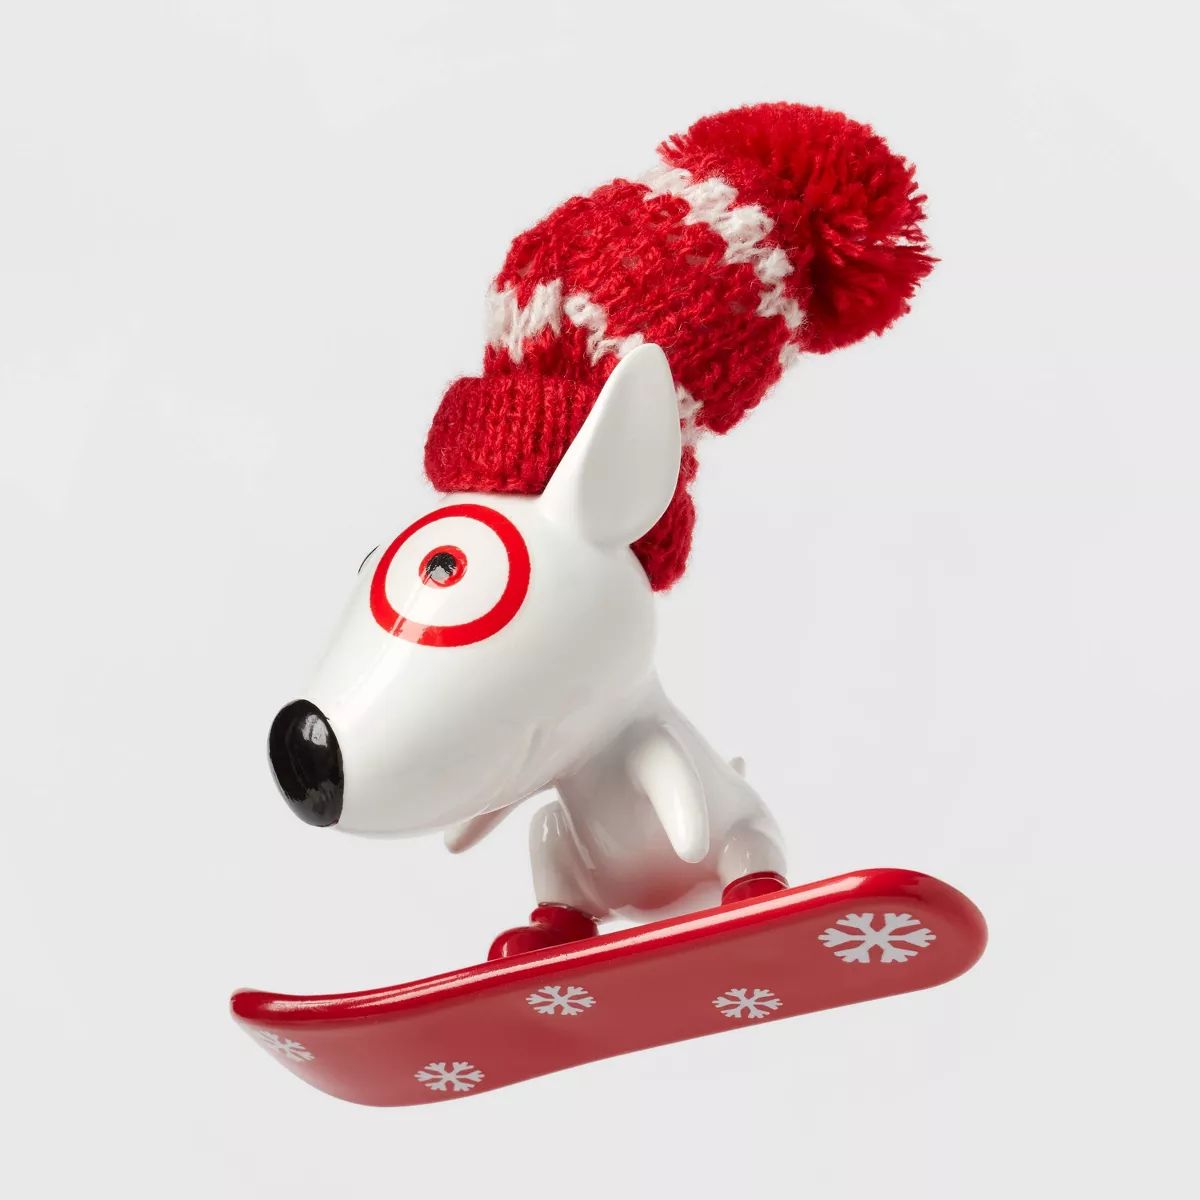 Bullseye Riding Snowboard Christmas Tree Ornament White/Red - Wondershop™ | Target